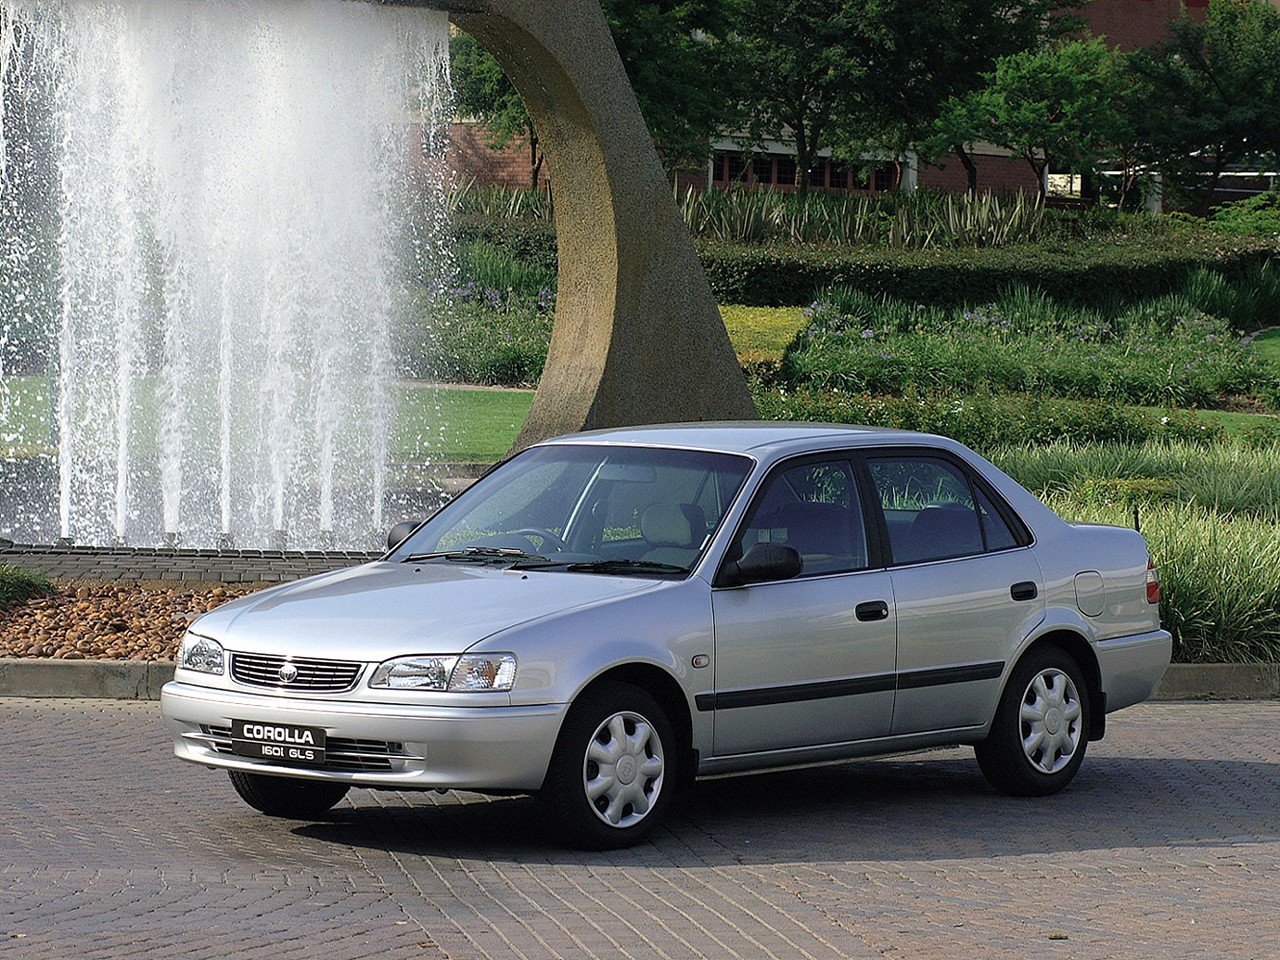 TOYOTA Corolla Sedan specs & photos - 1997, 1998, 1999 ...